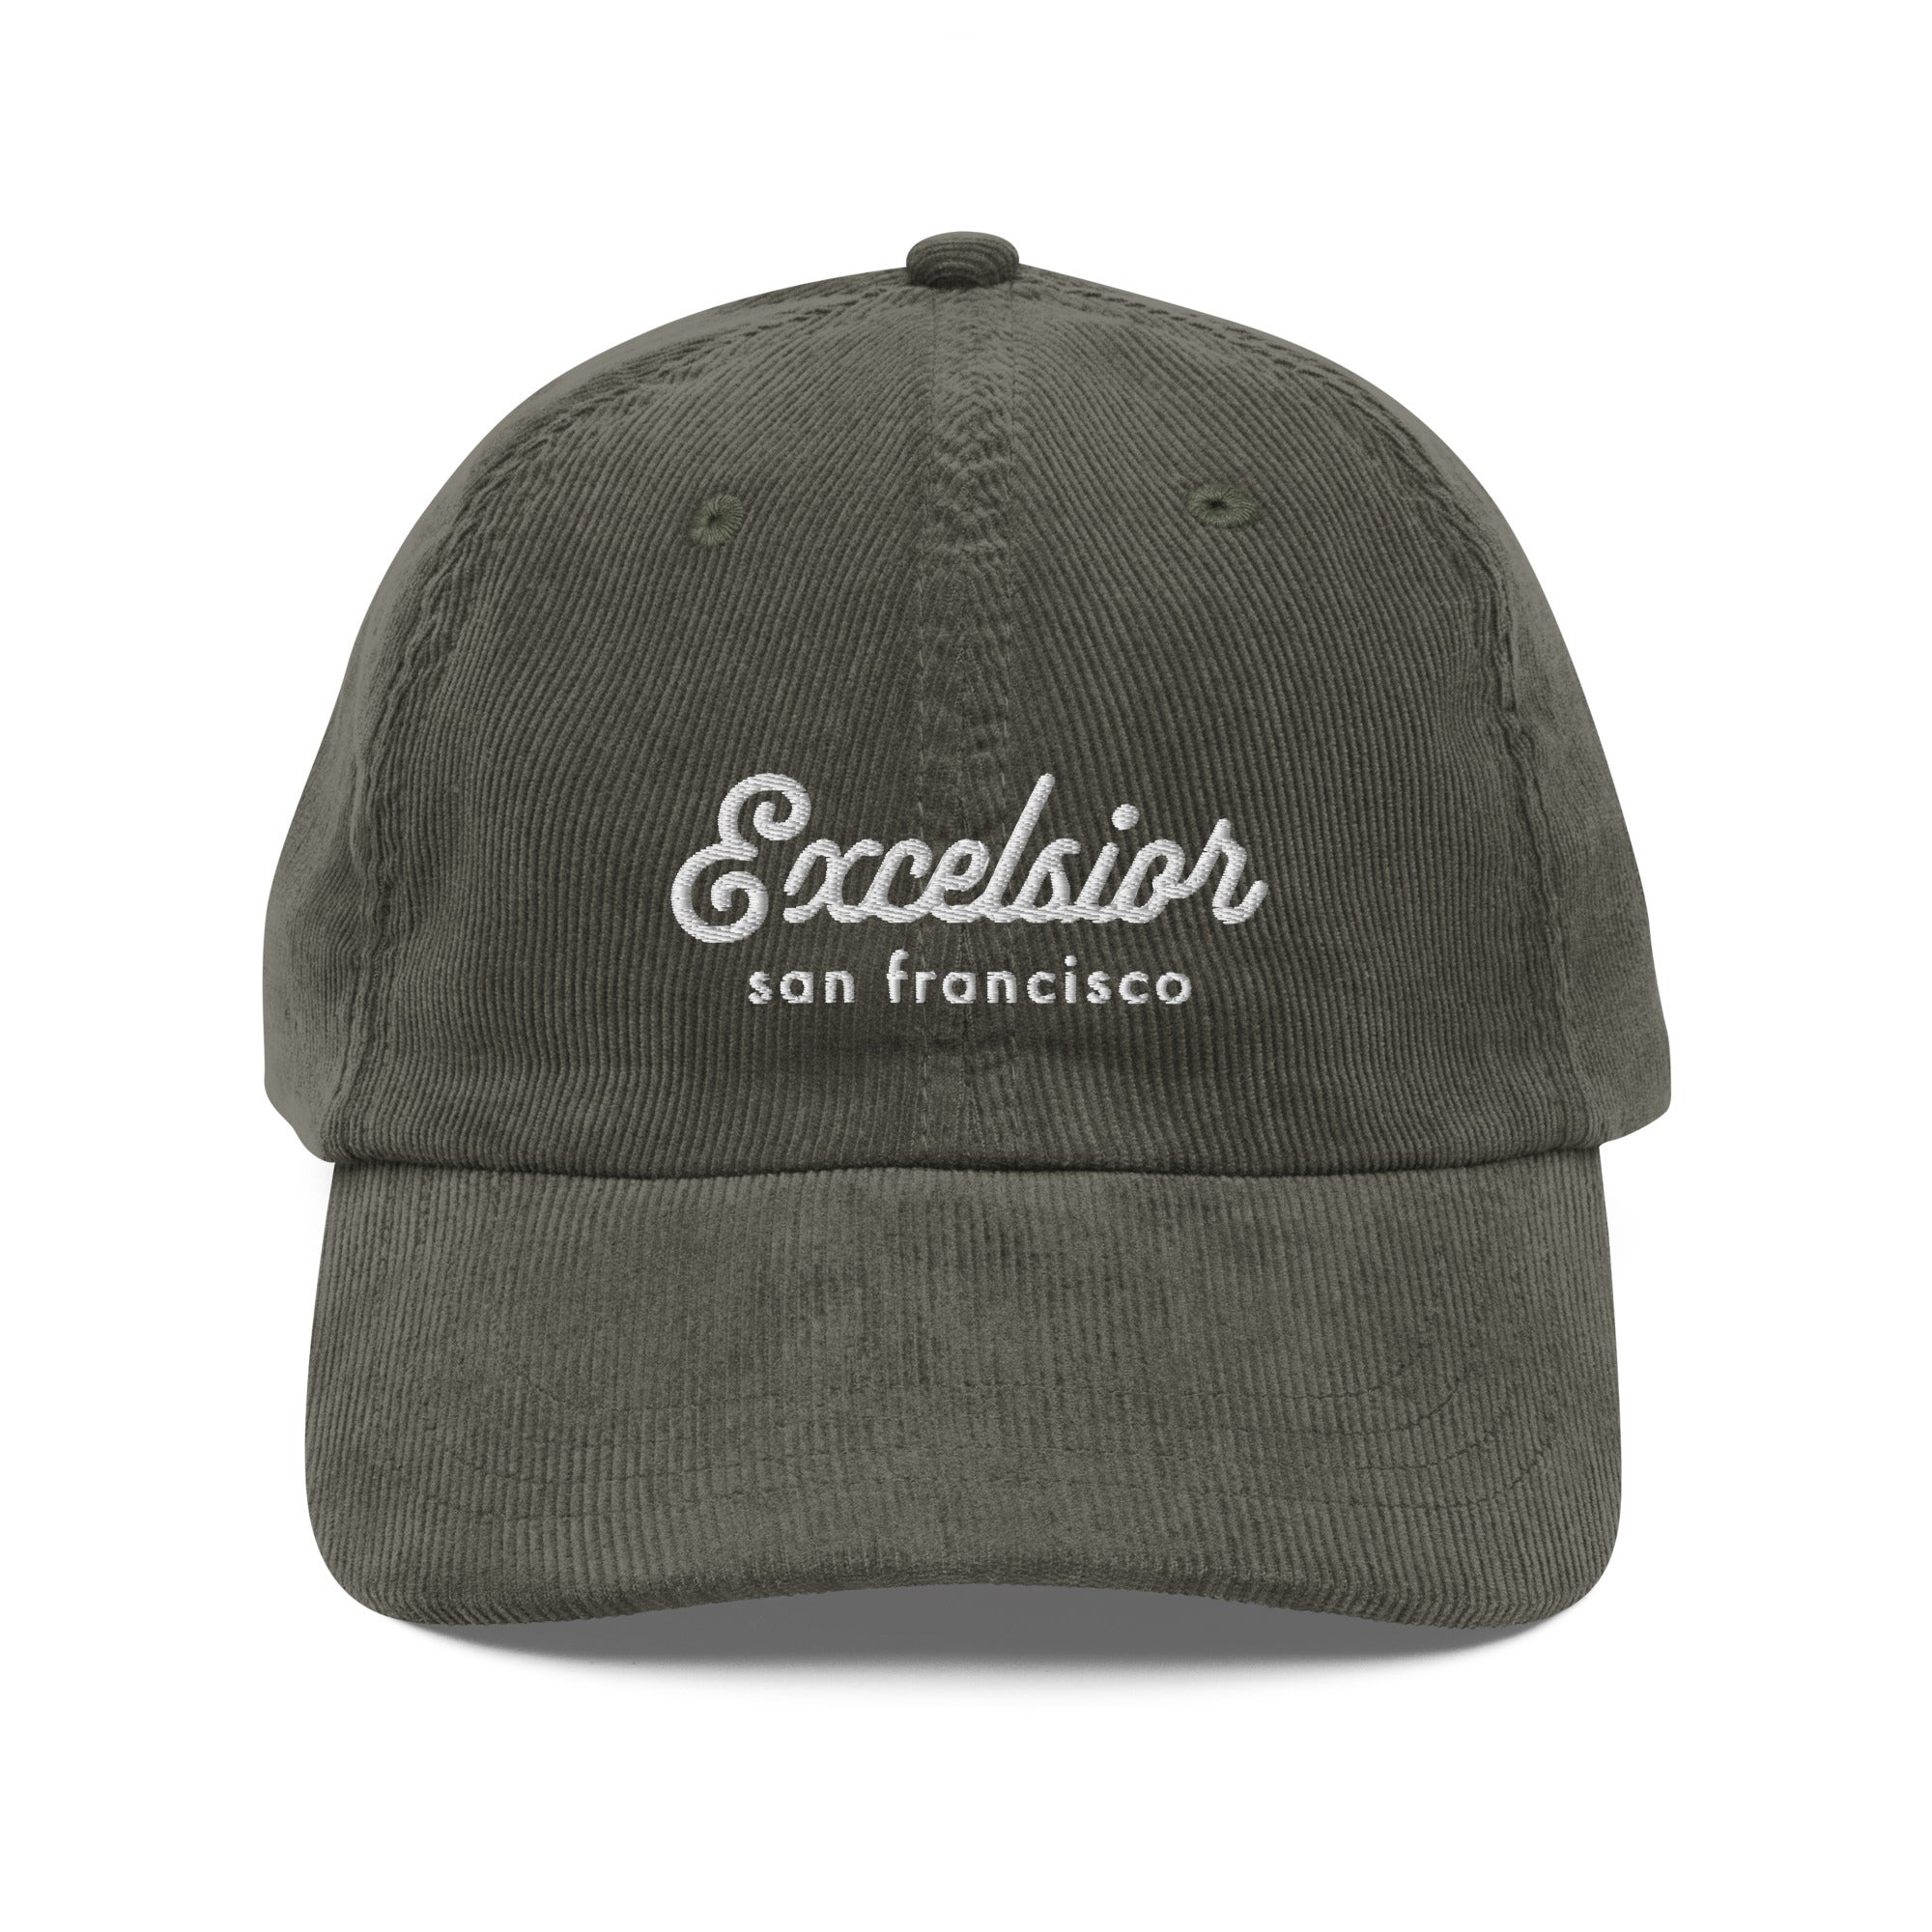 Script Corduroy Hat - Excelsior | San Francisco, CA